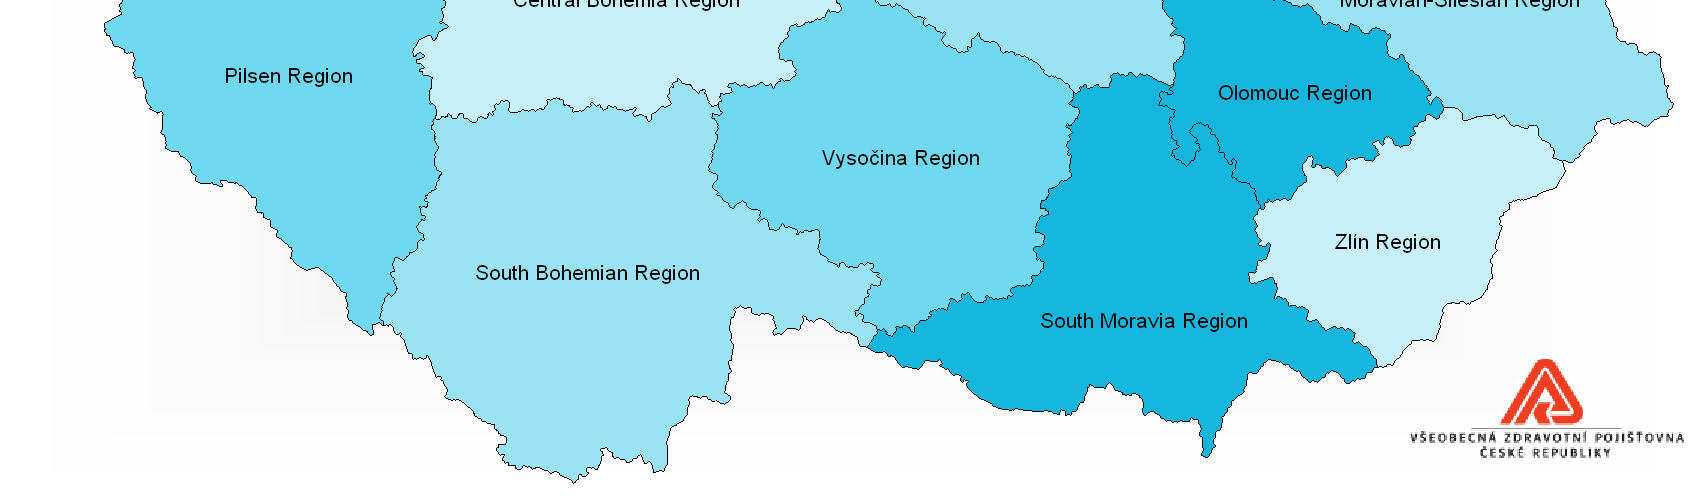 inhabitants according to region